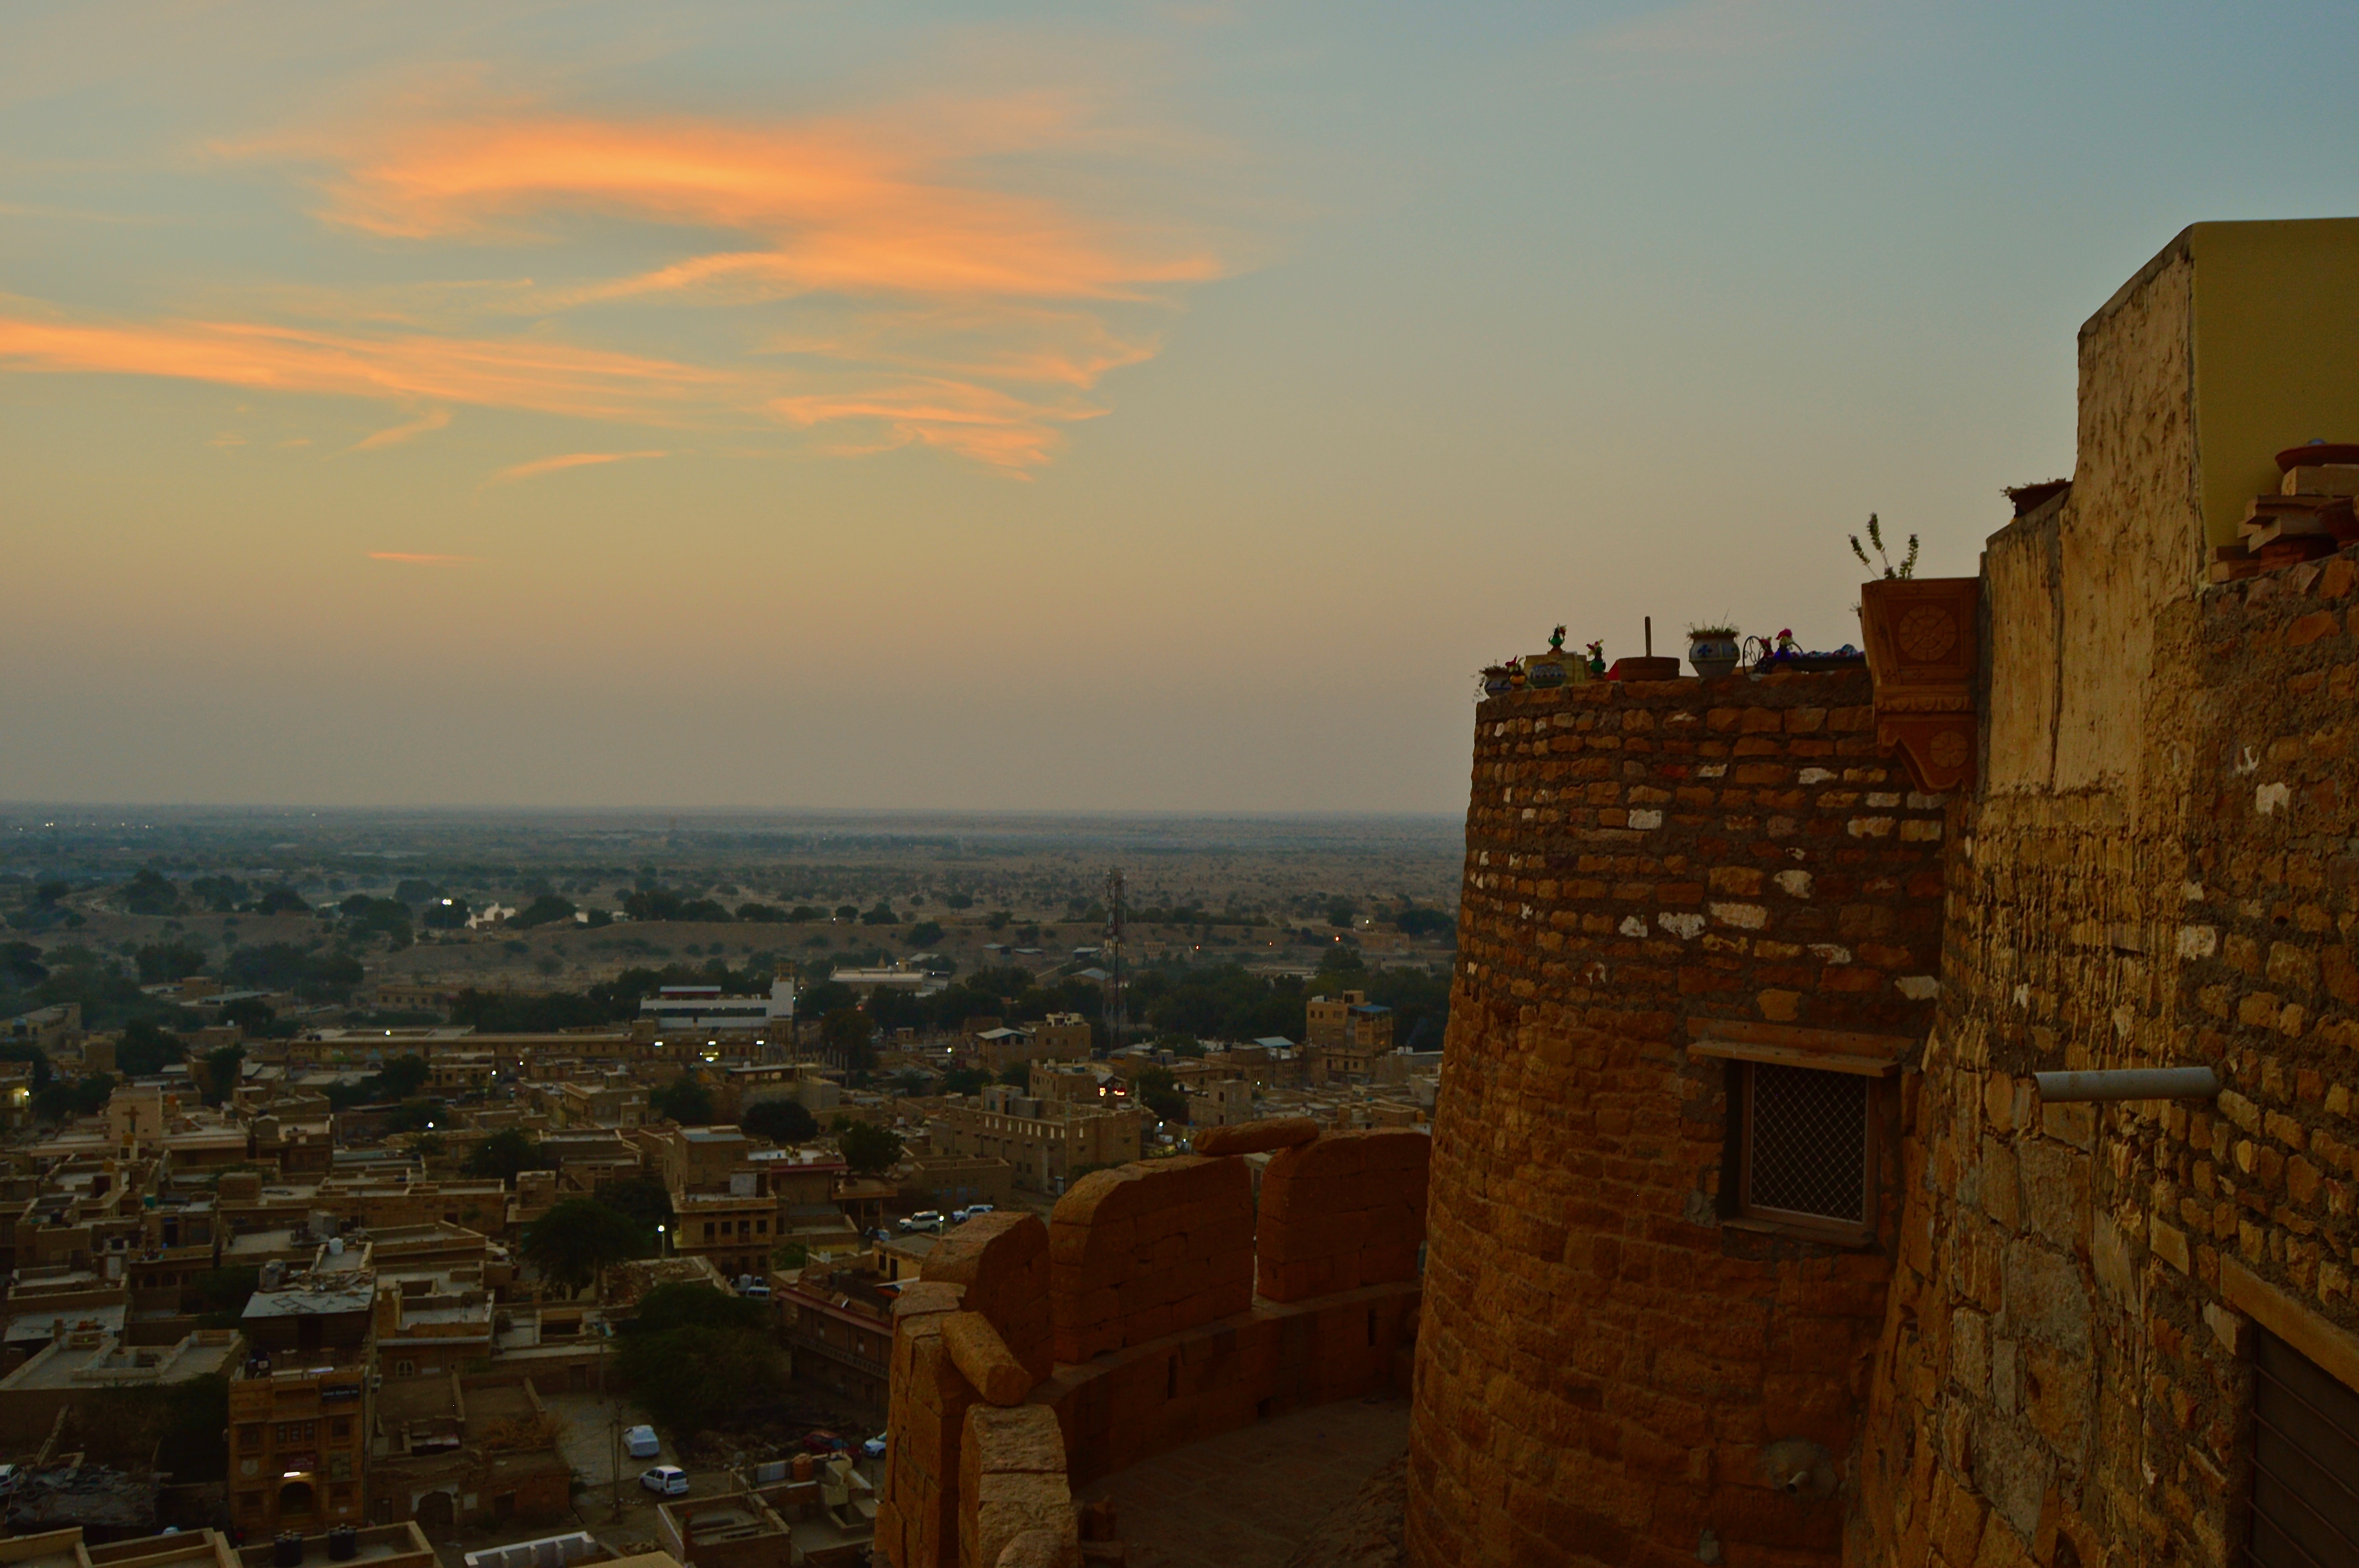 A Photo Journey Through Jaisalmer, India’s “Golden City”